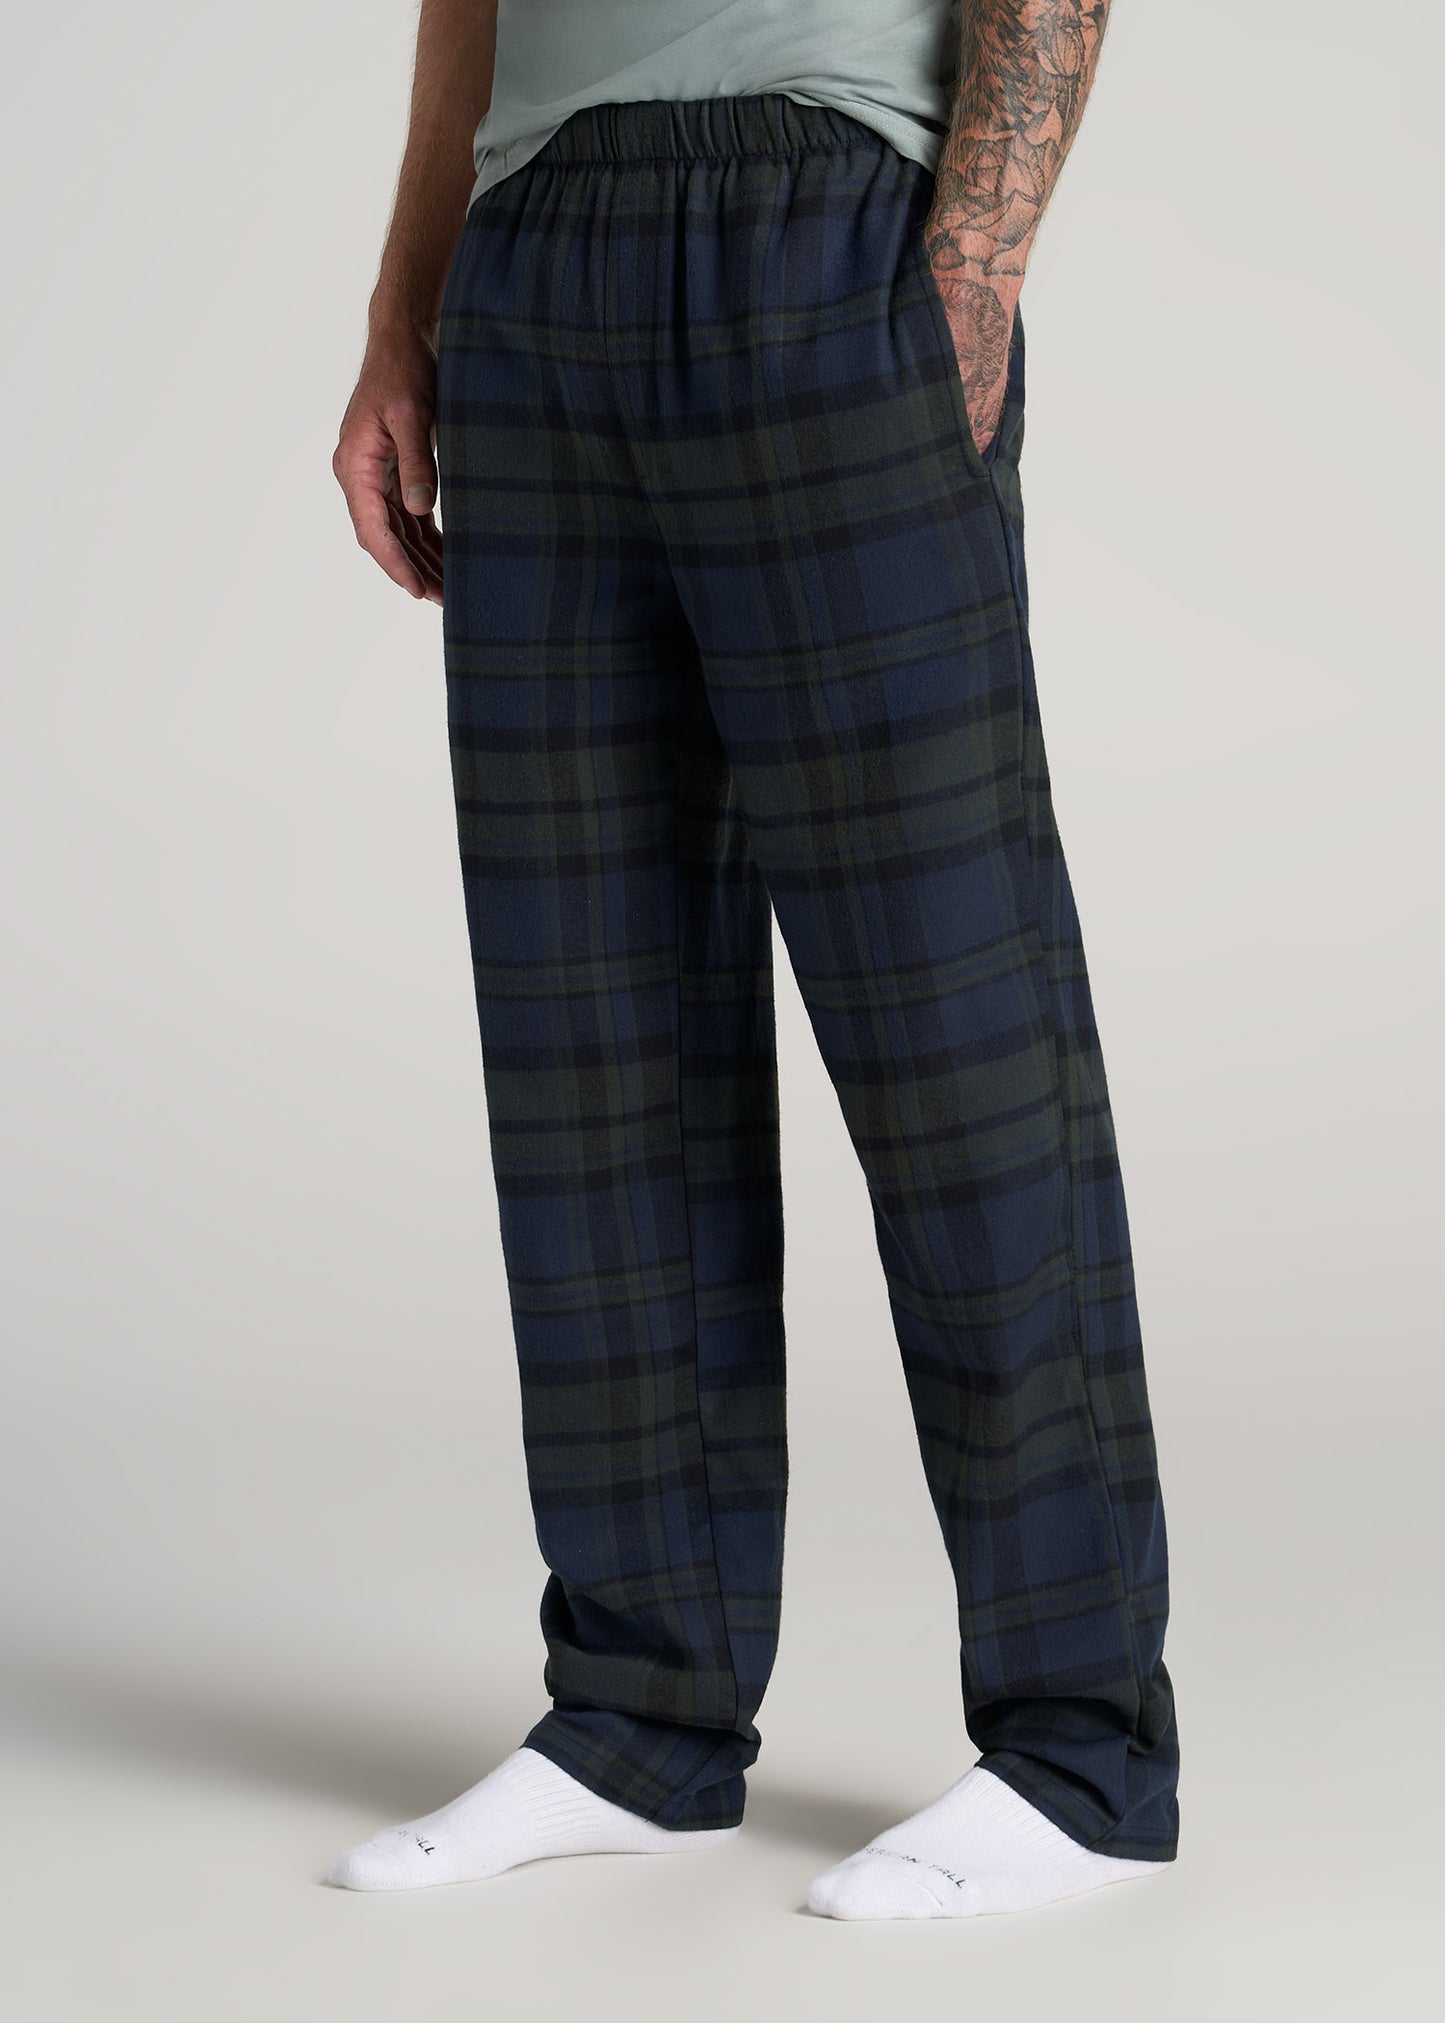 Black Men's Pajama Pants & Shorts | Dillard's